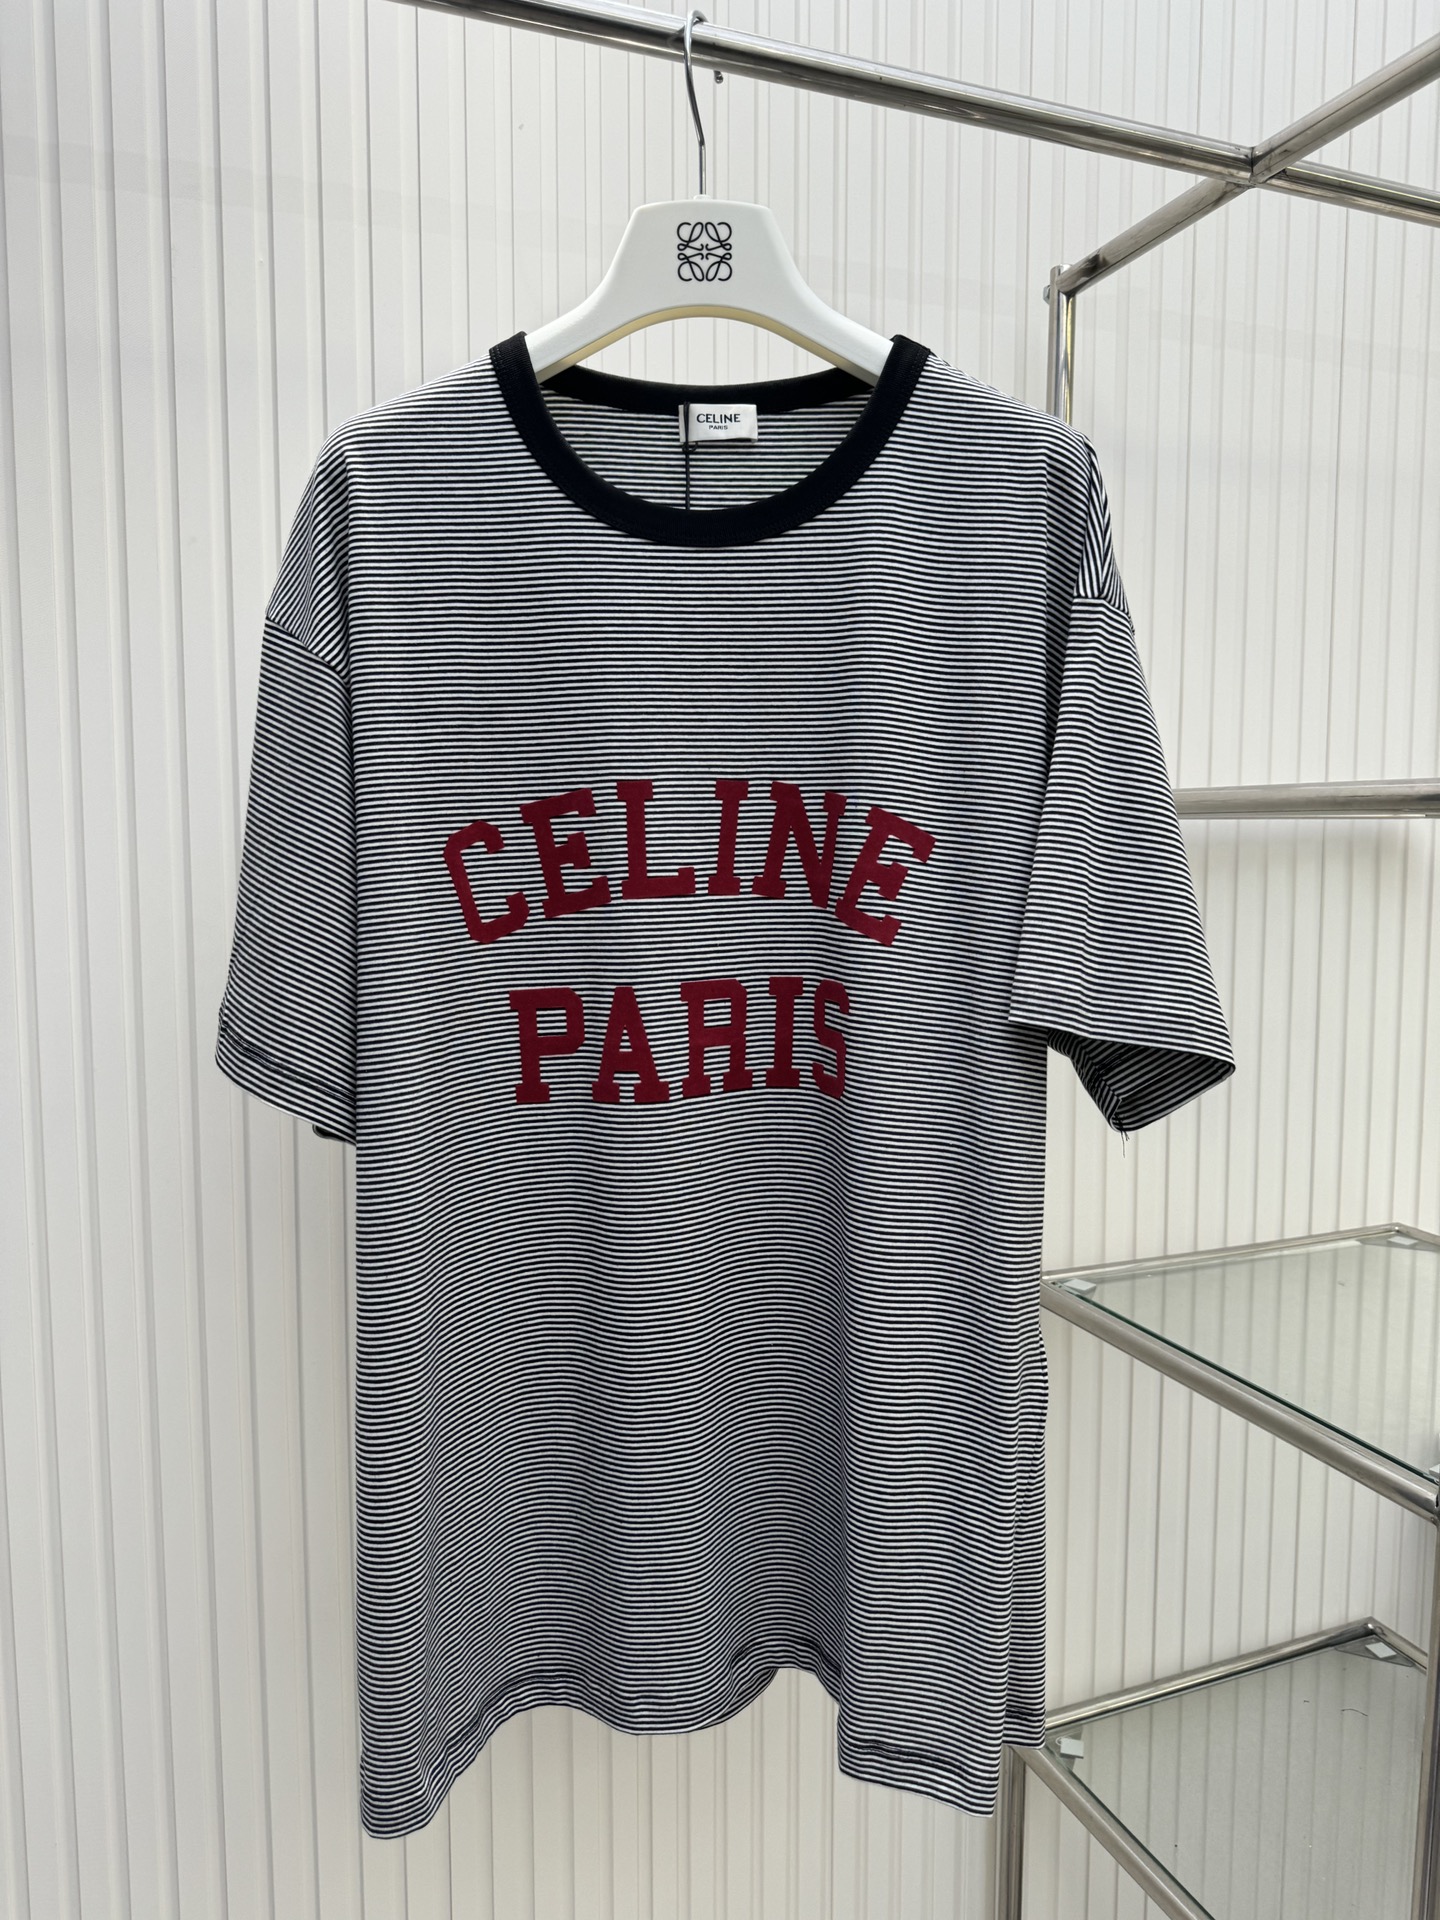 Celine Clothing T-Shirt Printing Knitting